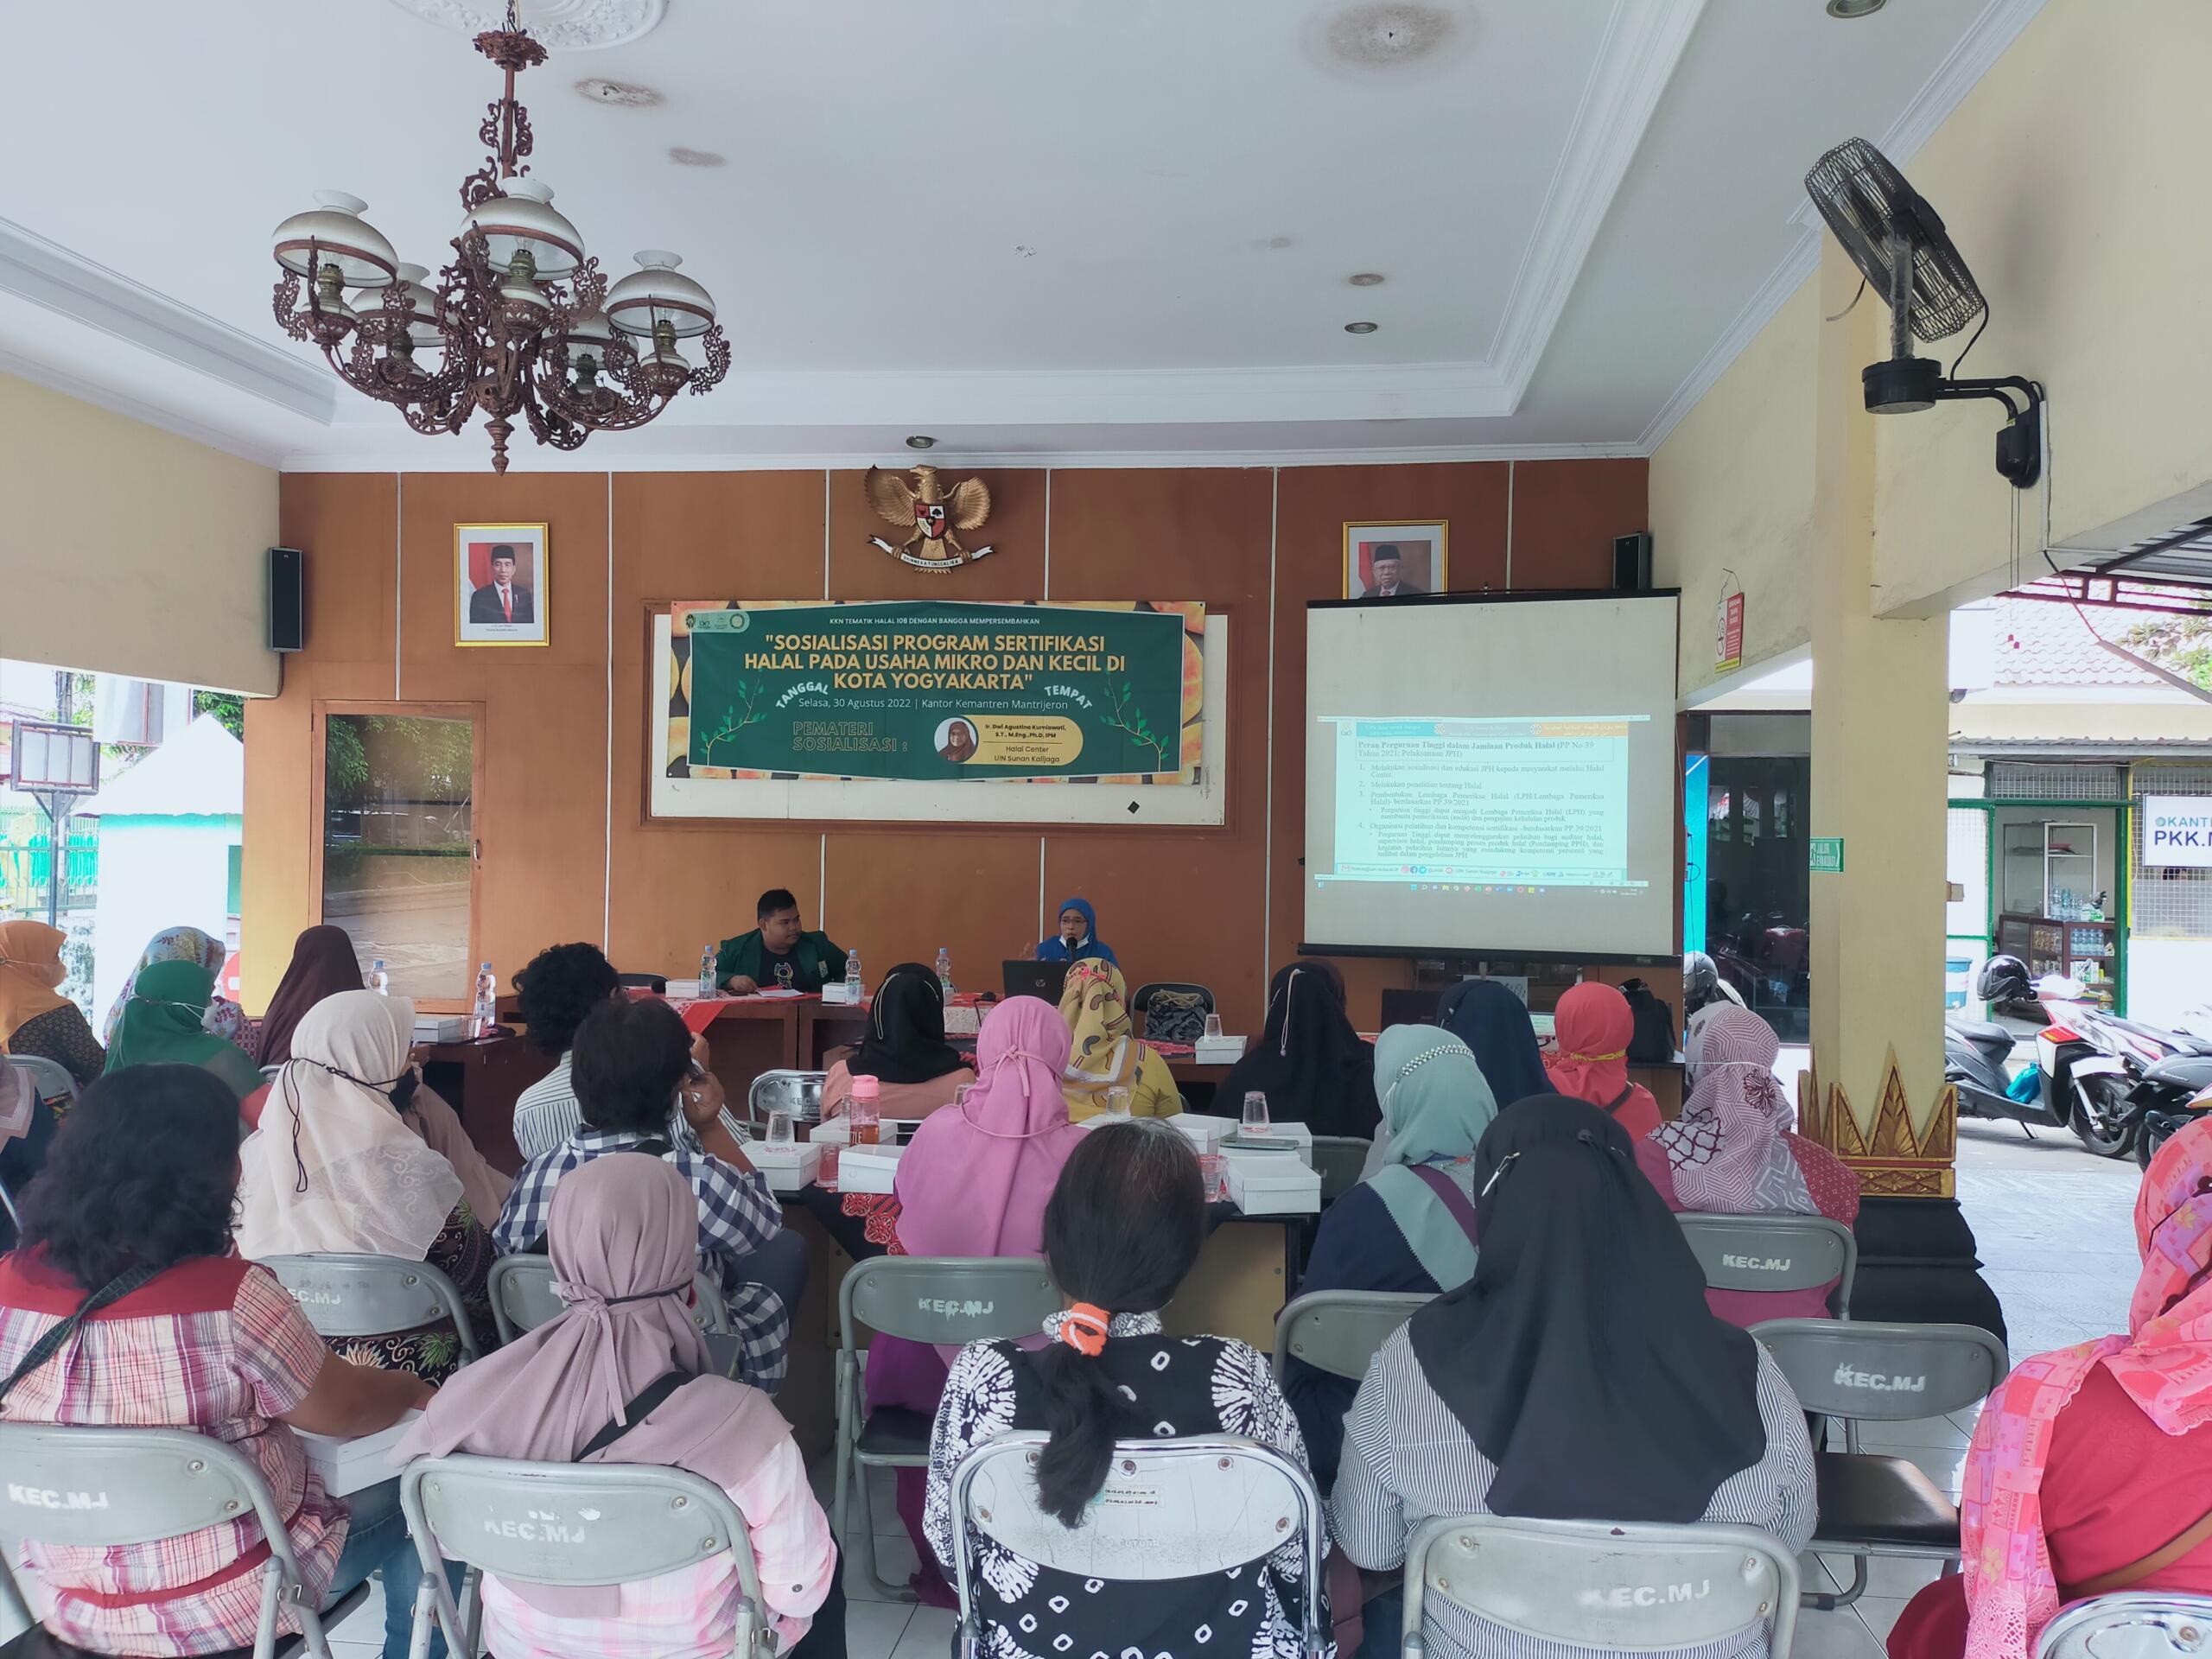 Gandeng Kemantren Mantrijeron, KKN Tematik Halal 108 UIN SUKA Gelar Seminar Sertifikasi Halal